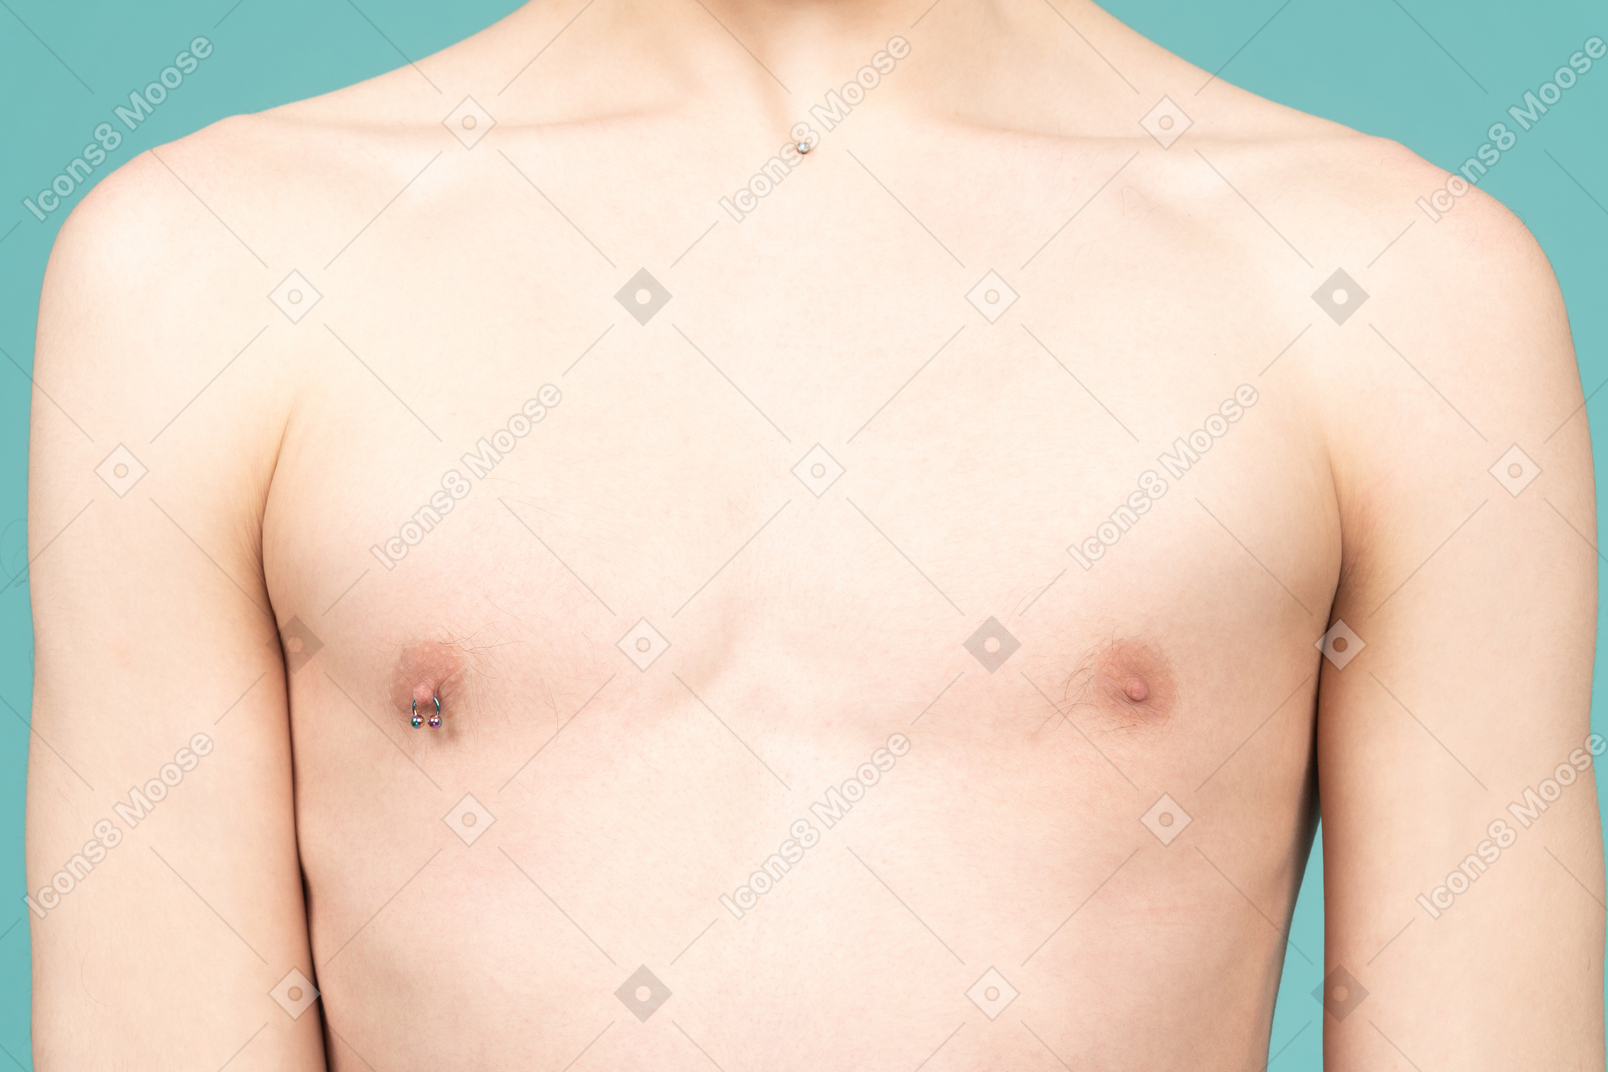 татуировки для мужчин на груди фото | Дзен